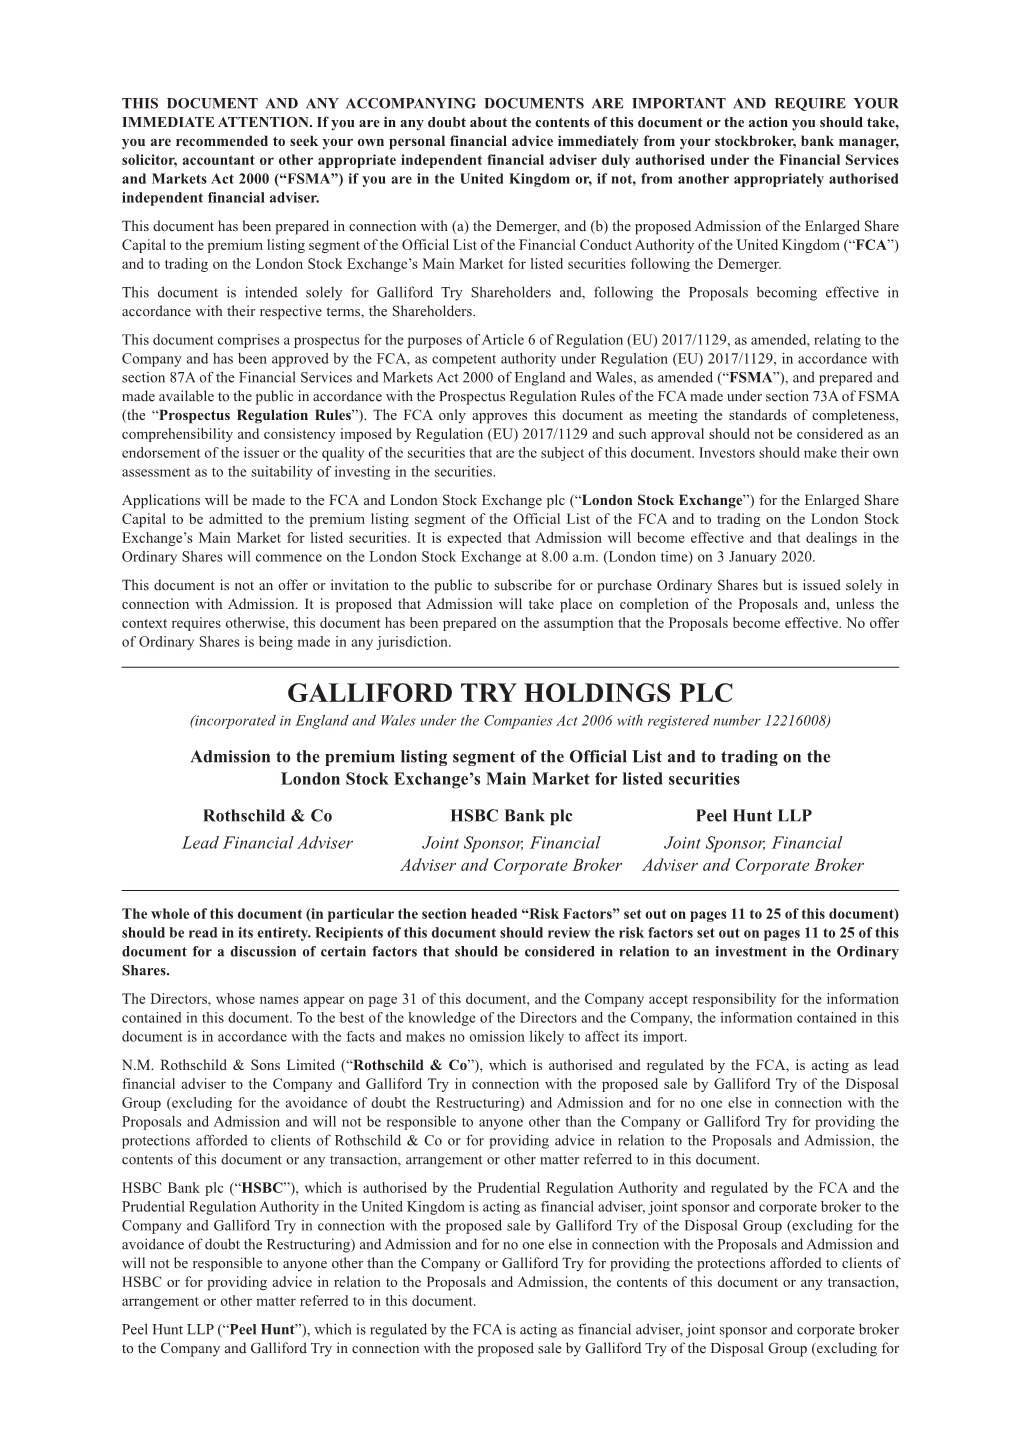 25 Nov 2019 Galliford Try Holdings Plc Prospectus Download PDF 1.21